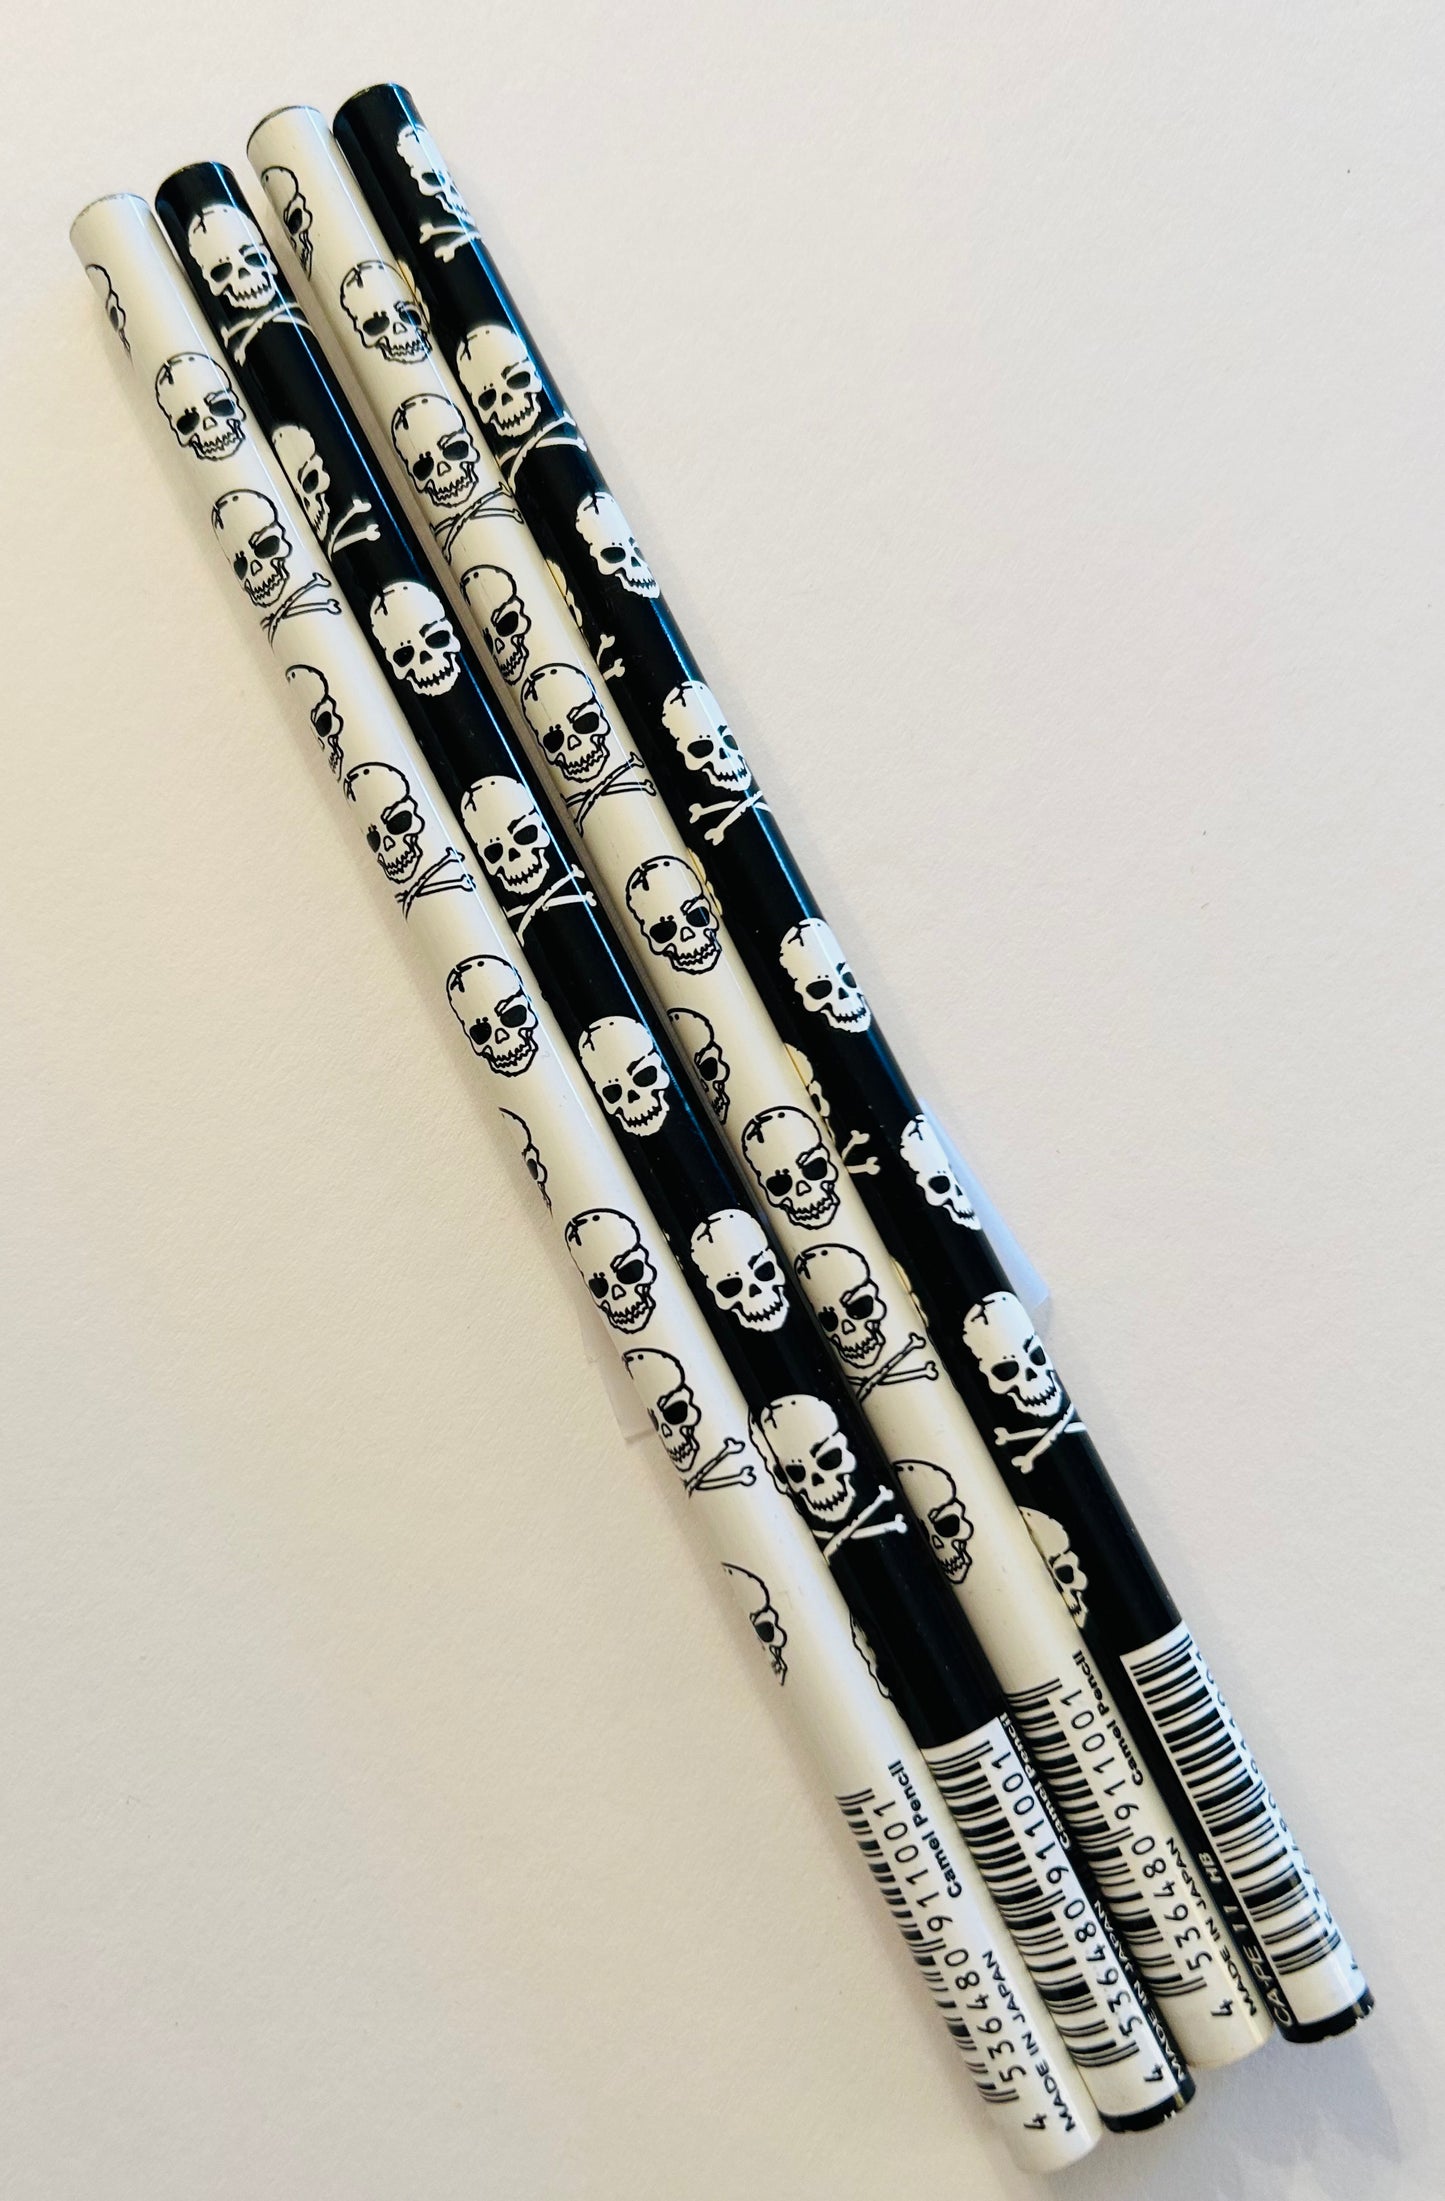 Black & White Skull Pencil Set